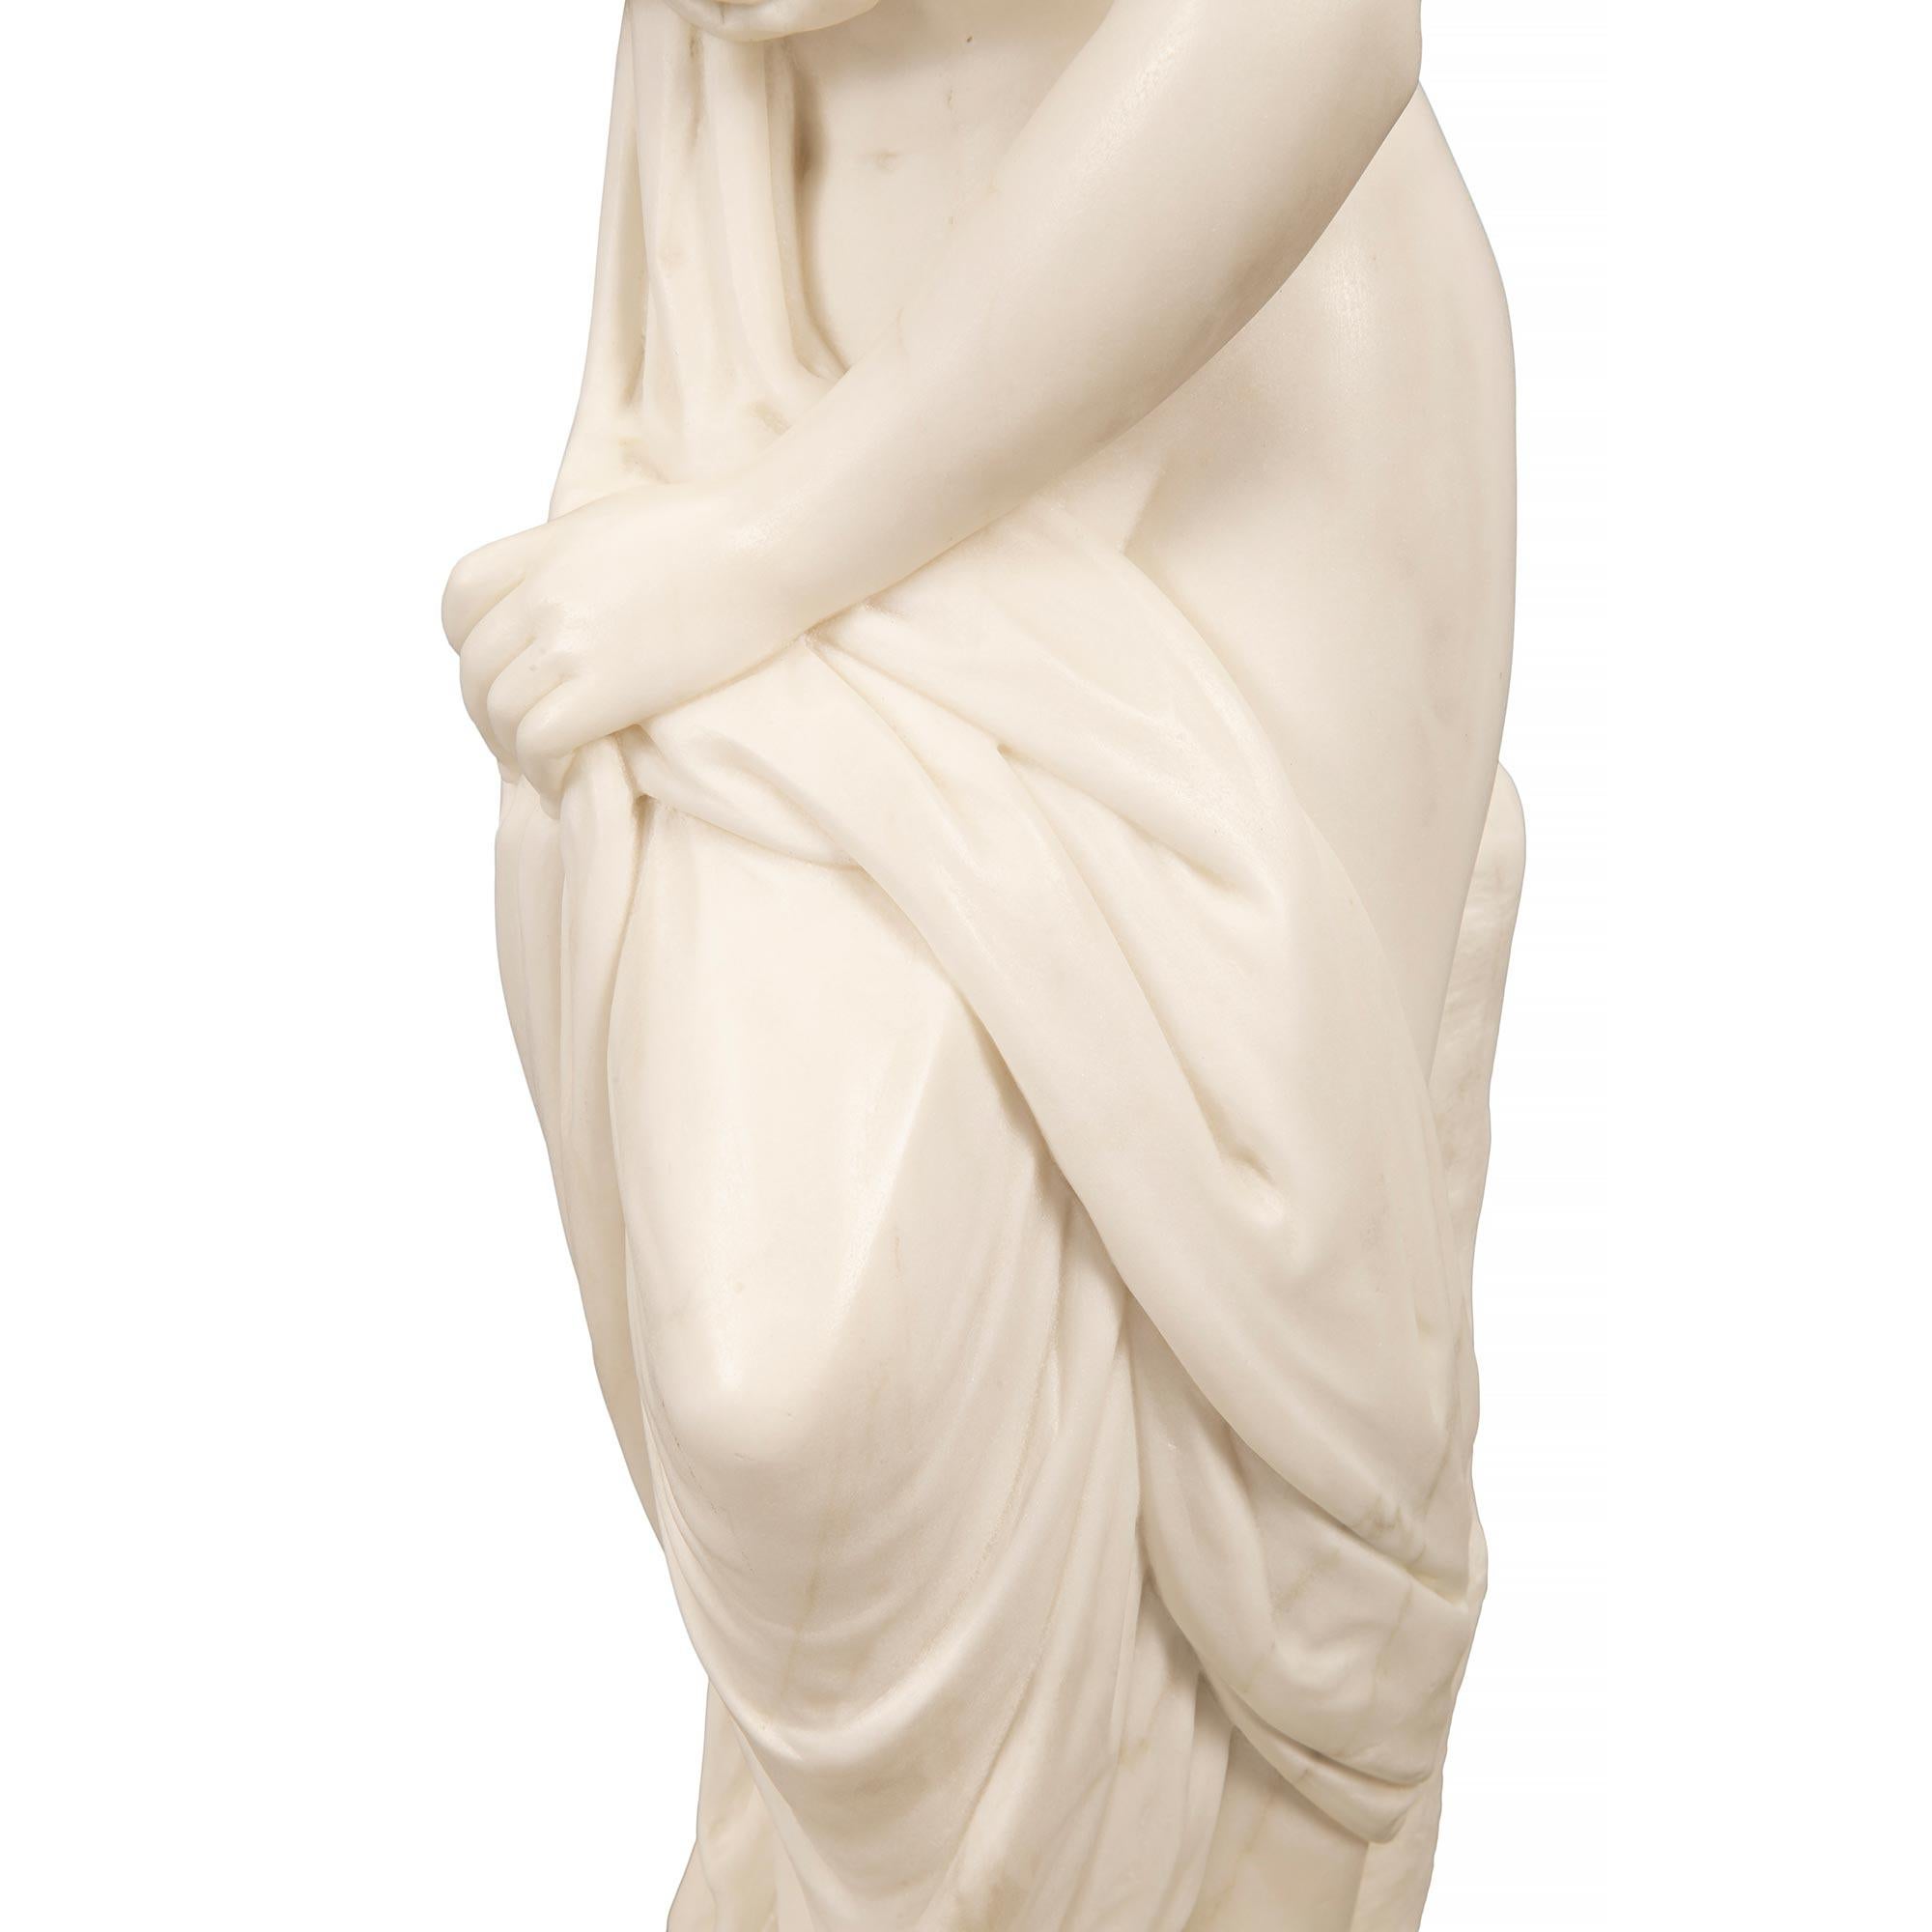 Italian 19th Century Neoclassical St. Marble Statue Of “La Baigneuse” For Sale 2